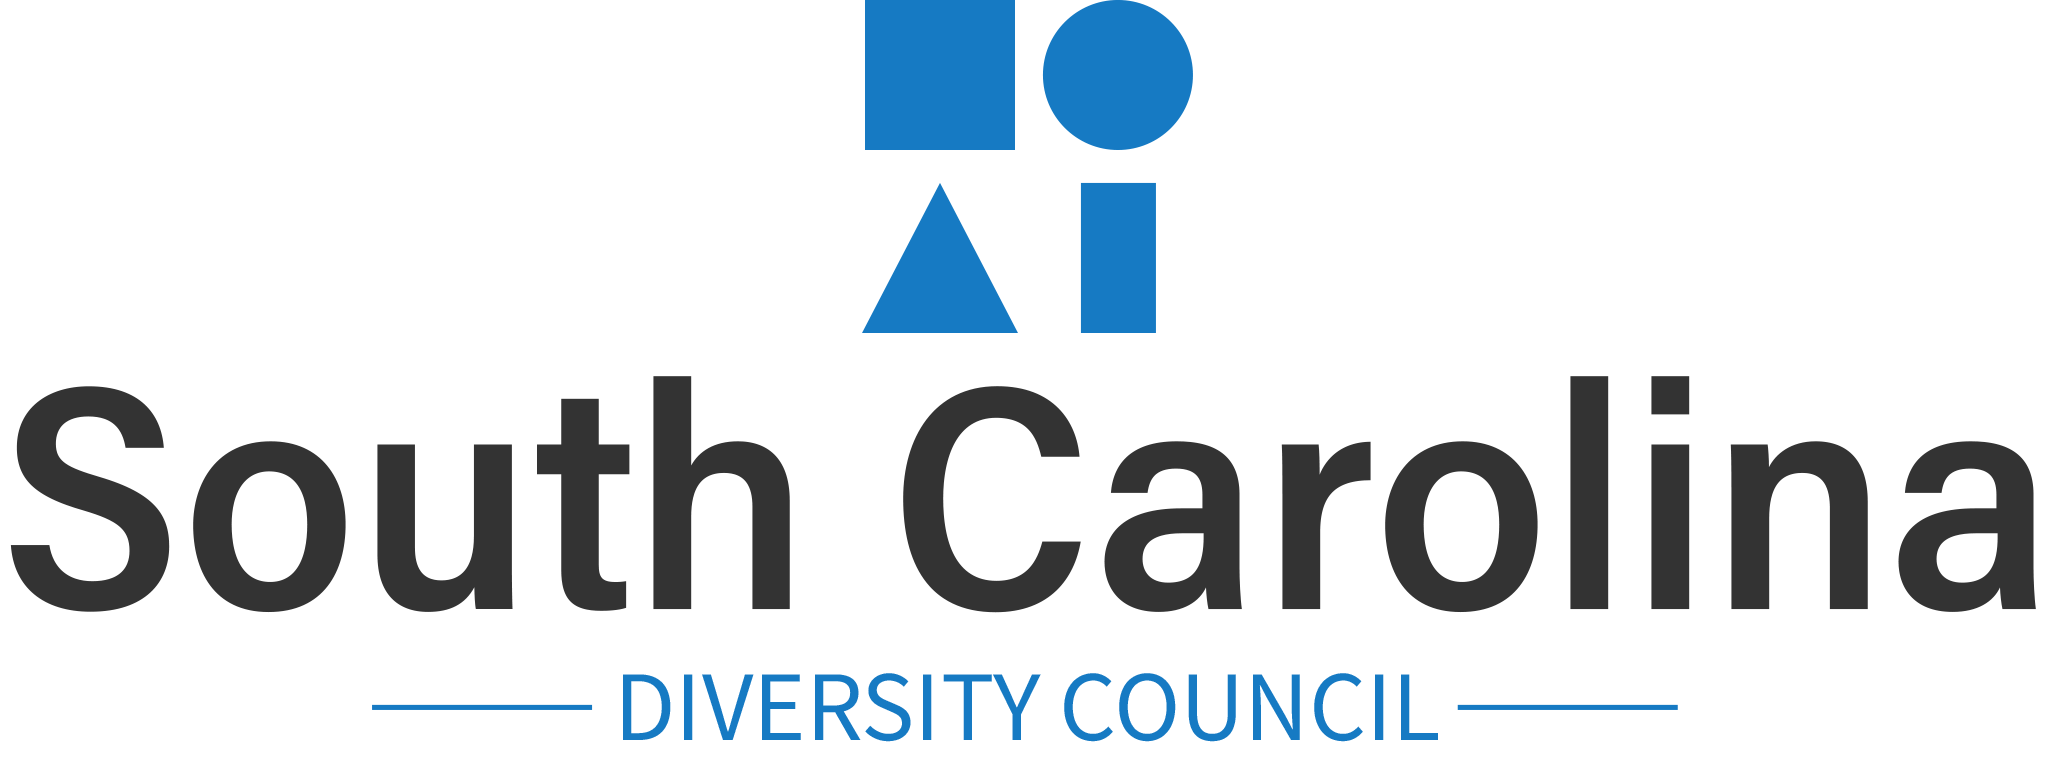 South Carolina Diversity Council - SCDC